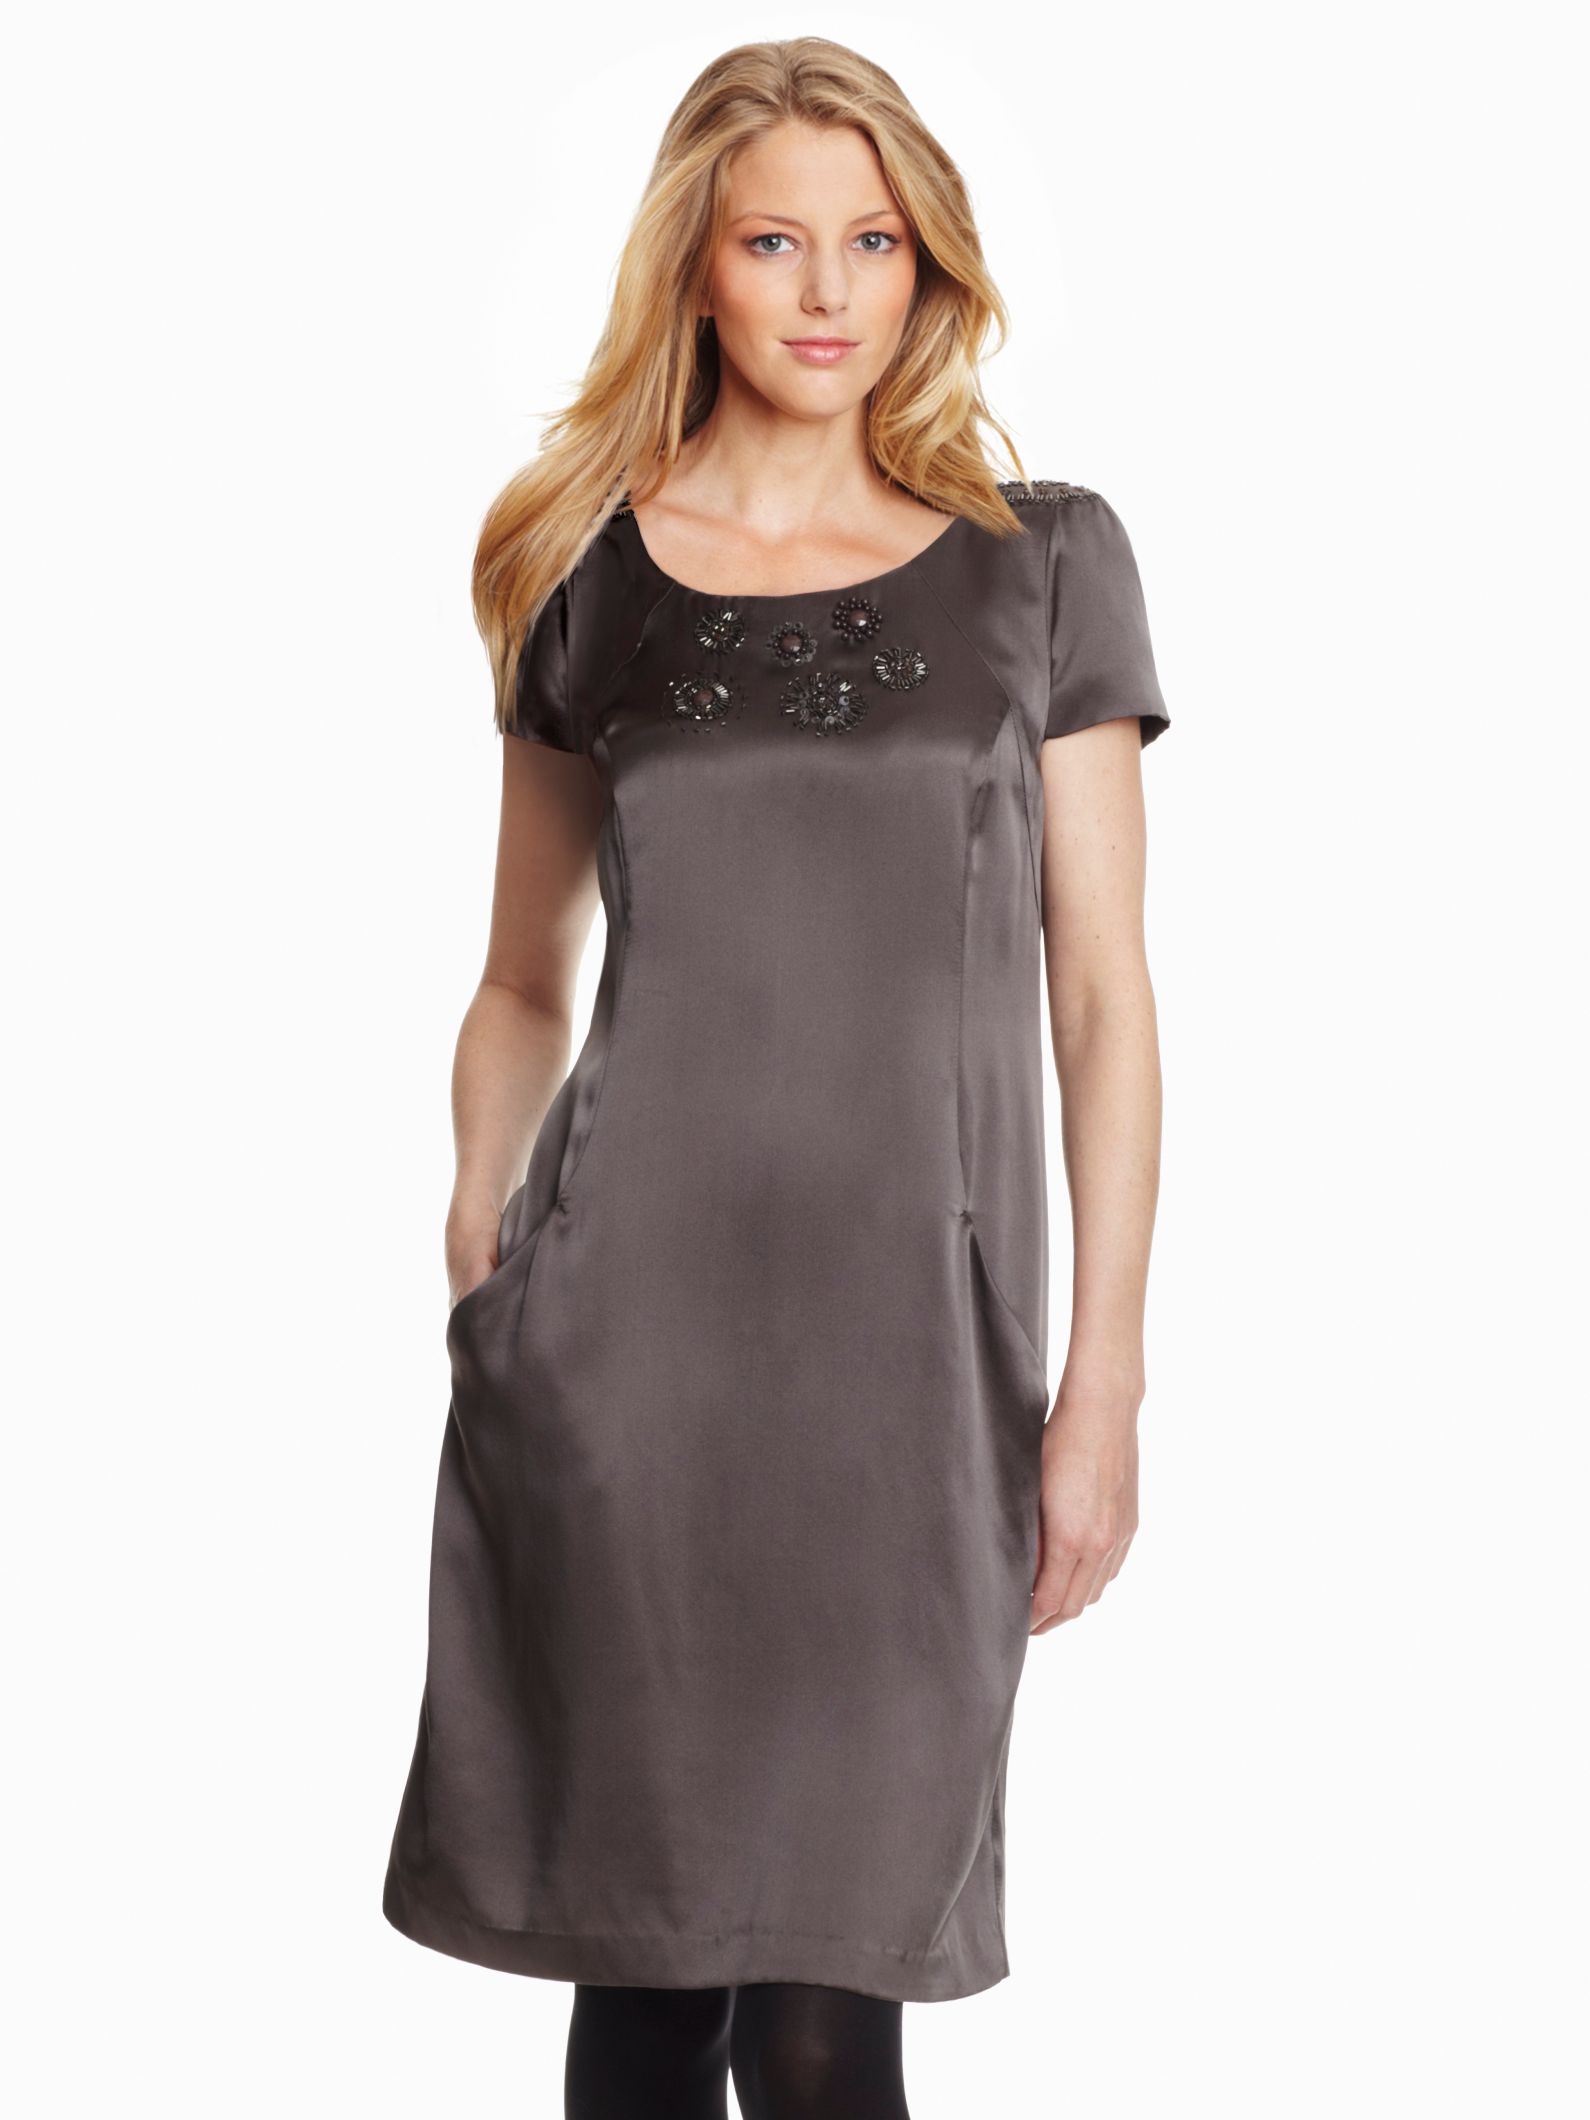 Gérard Darel Embellished Short Sleeve Silk Dress, Dark grey at John Lewis